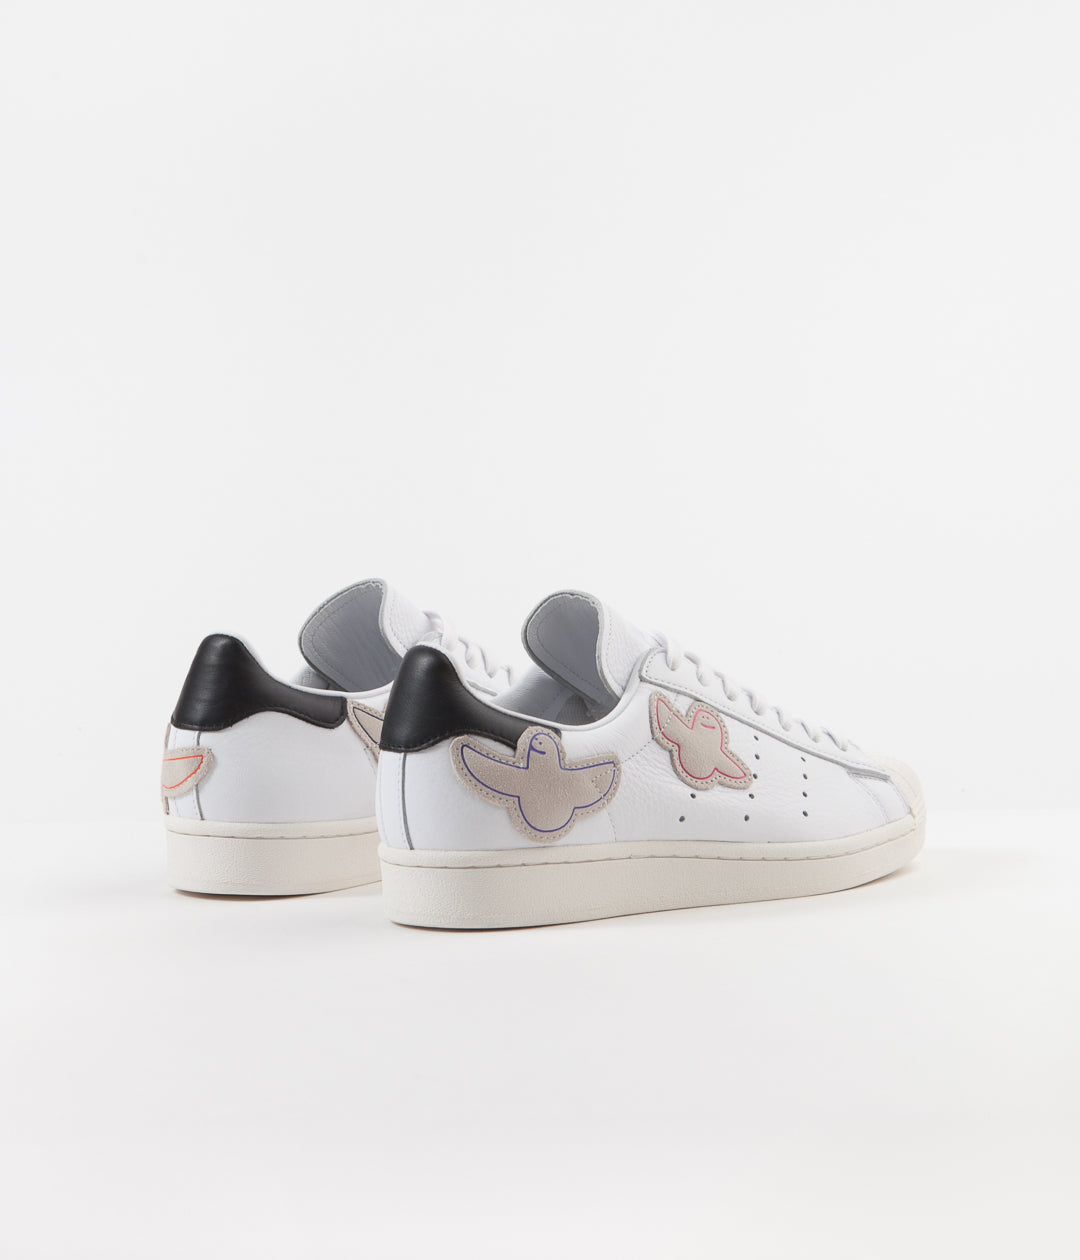 caminar Sembrar Ánimo Adidas Superstar 80's 'Gonz' Shoes - White / Core Black / Chalk White |  Flatspot